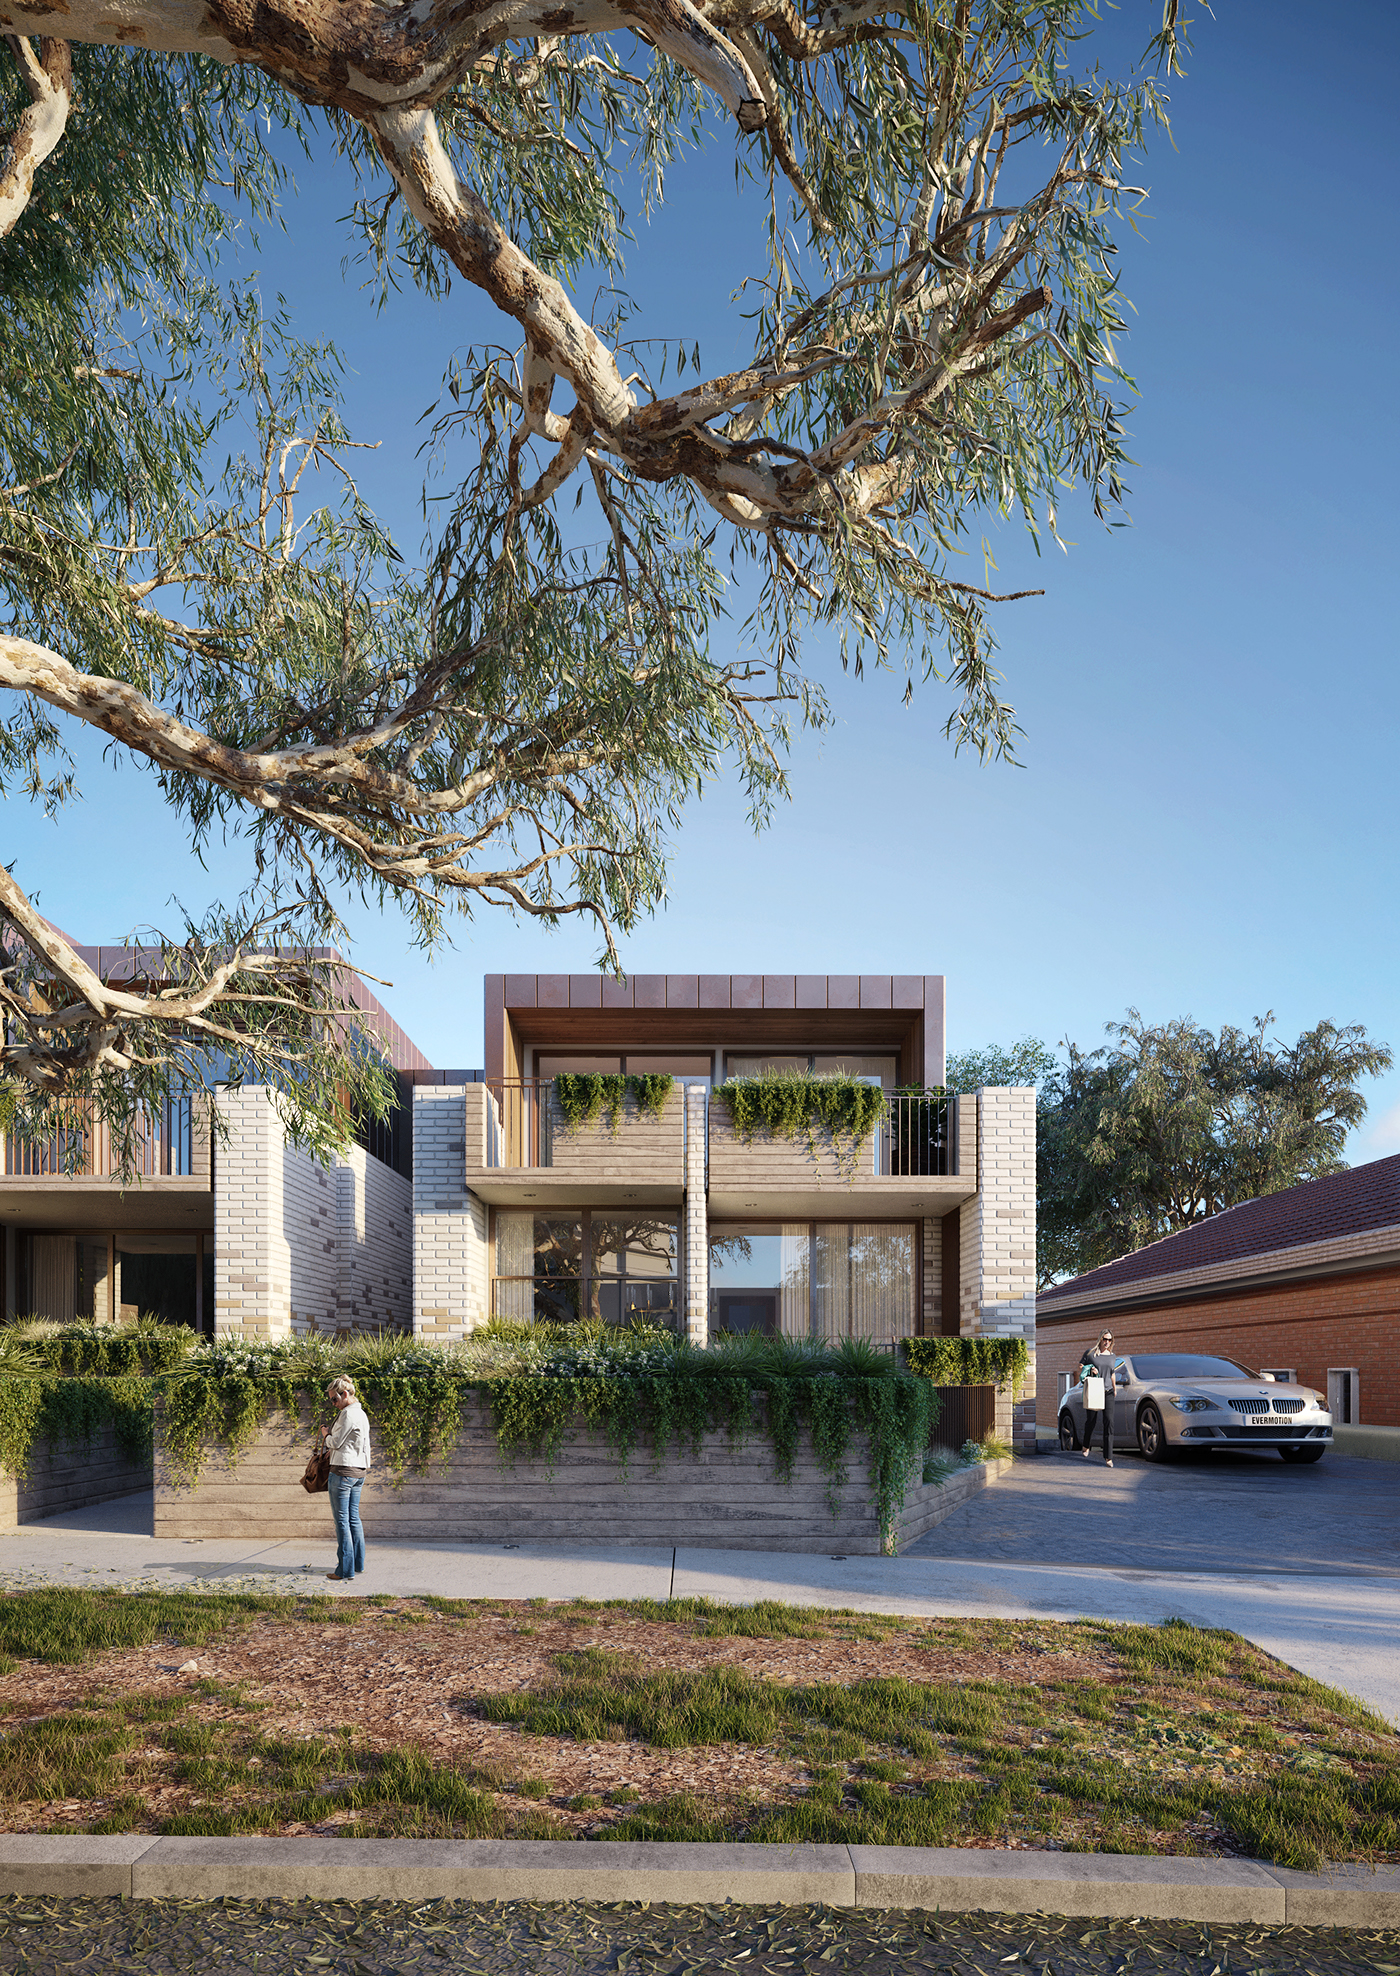 Australia residential corona real estate property marketing   Sunny blue sky contrasts